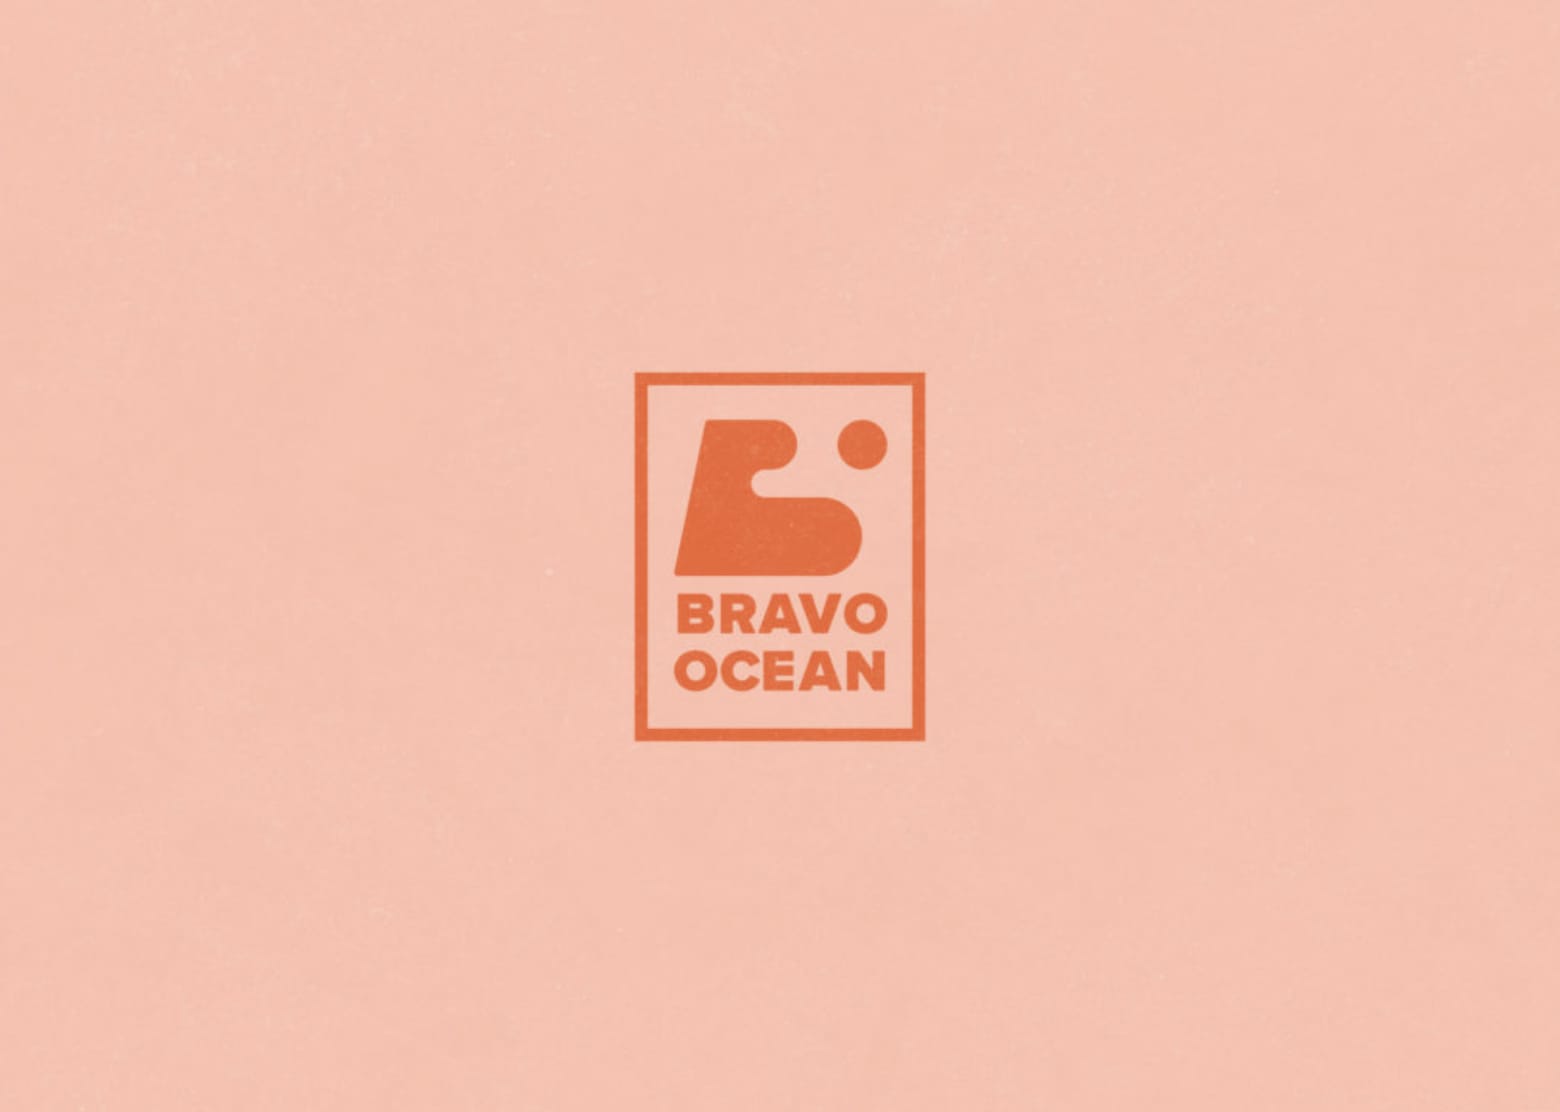 Branding, Custom Signs & Graphics Designs for Businesses – Bravo